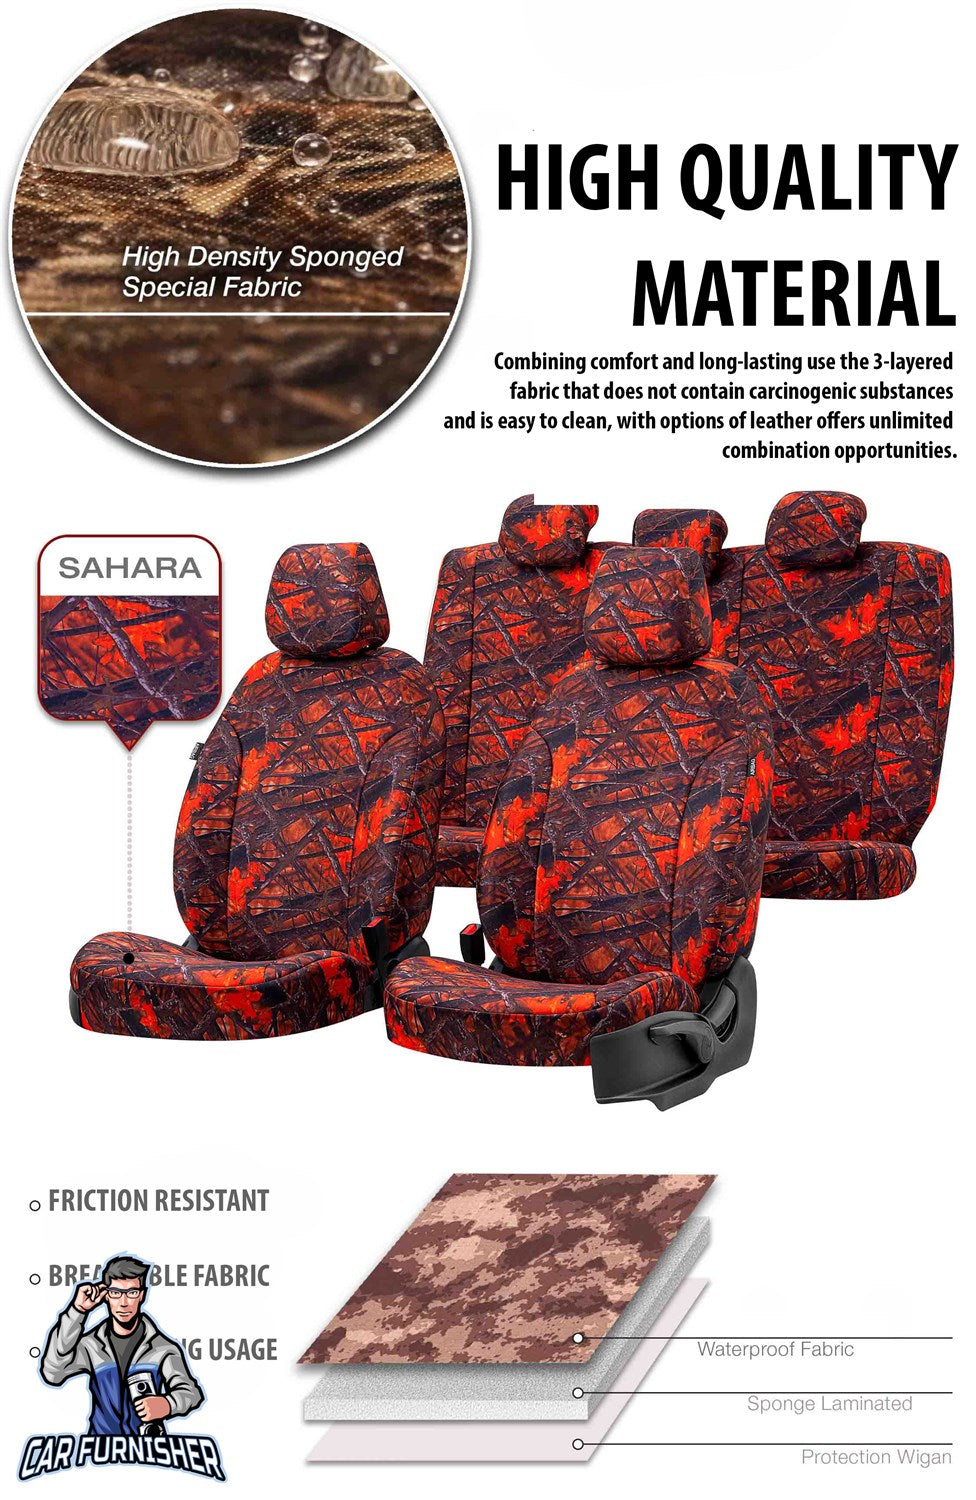 Skoda Fabia Seat Covers Camouflage Waterproof Design Alps Camo Waterproof Fabric